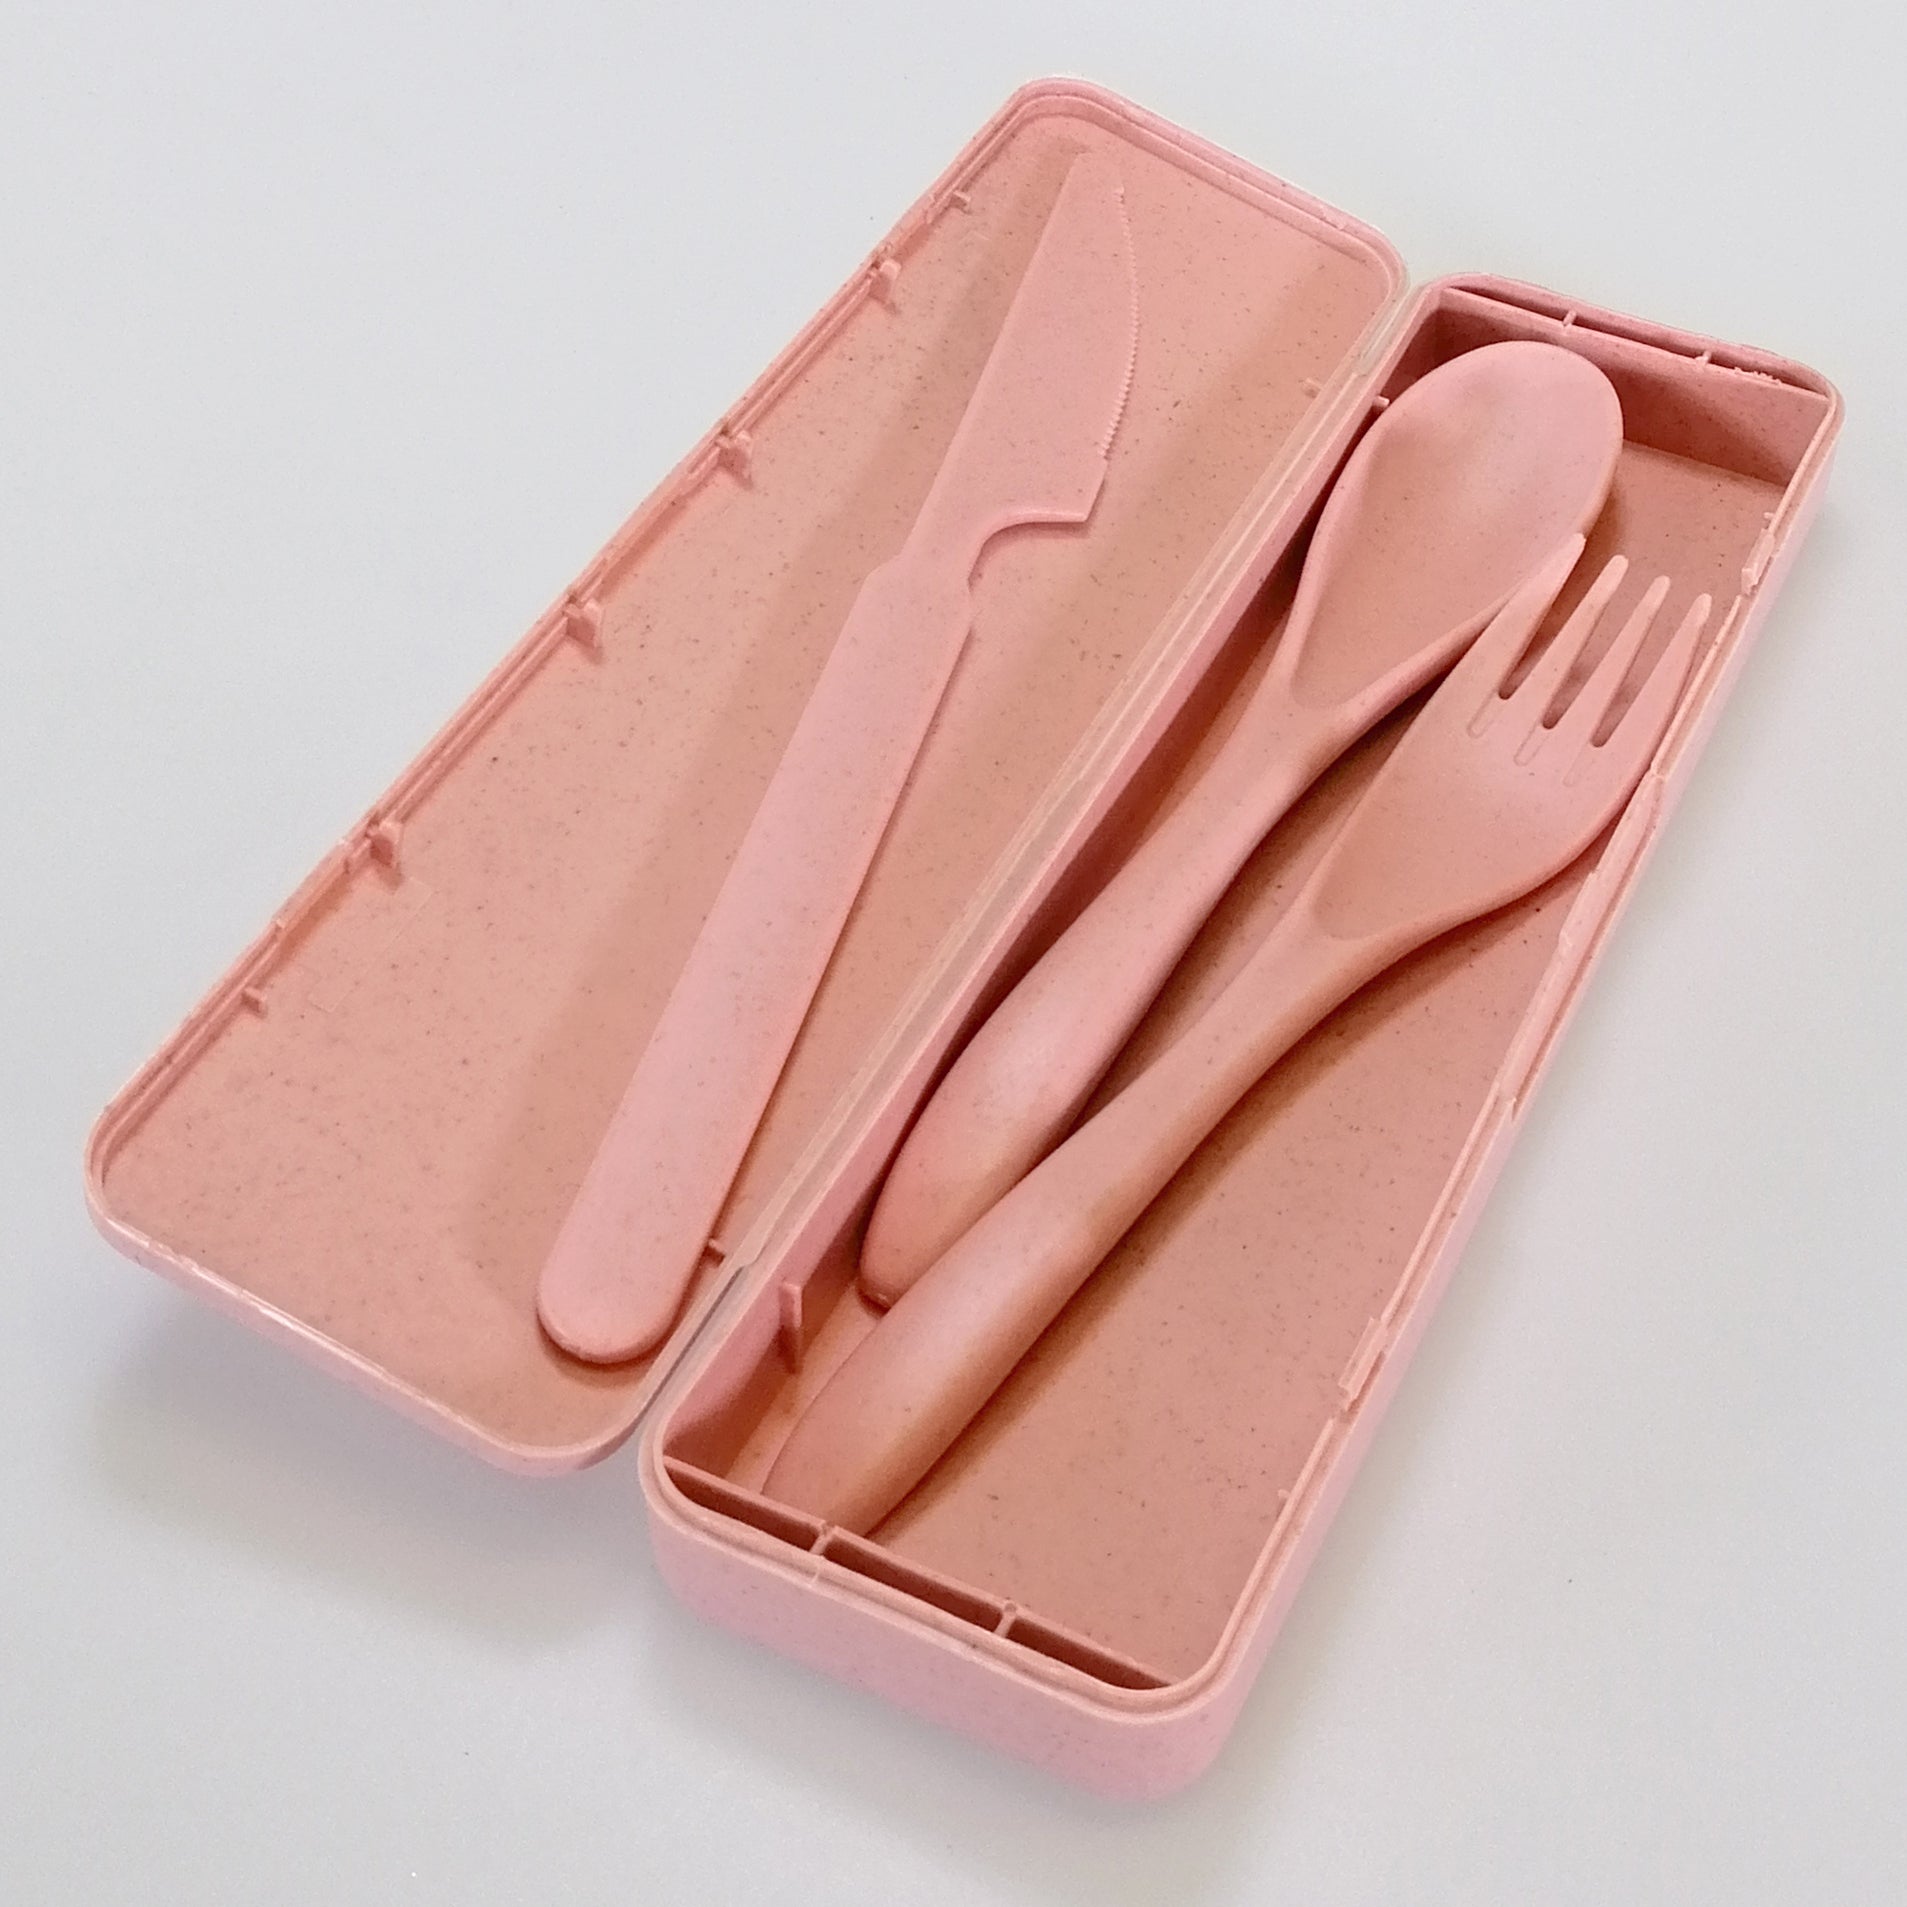 Assorted Wheat Straw Travel Cutlery Set